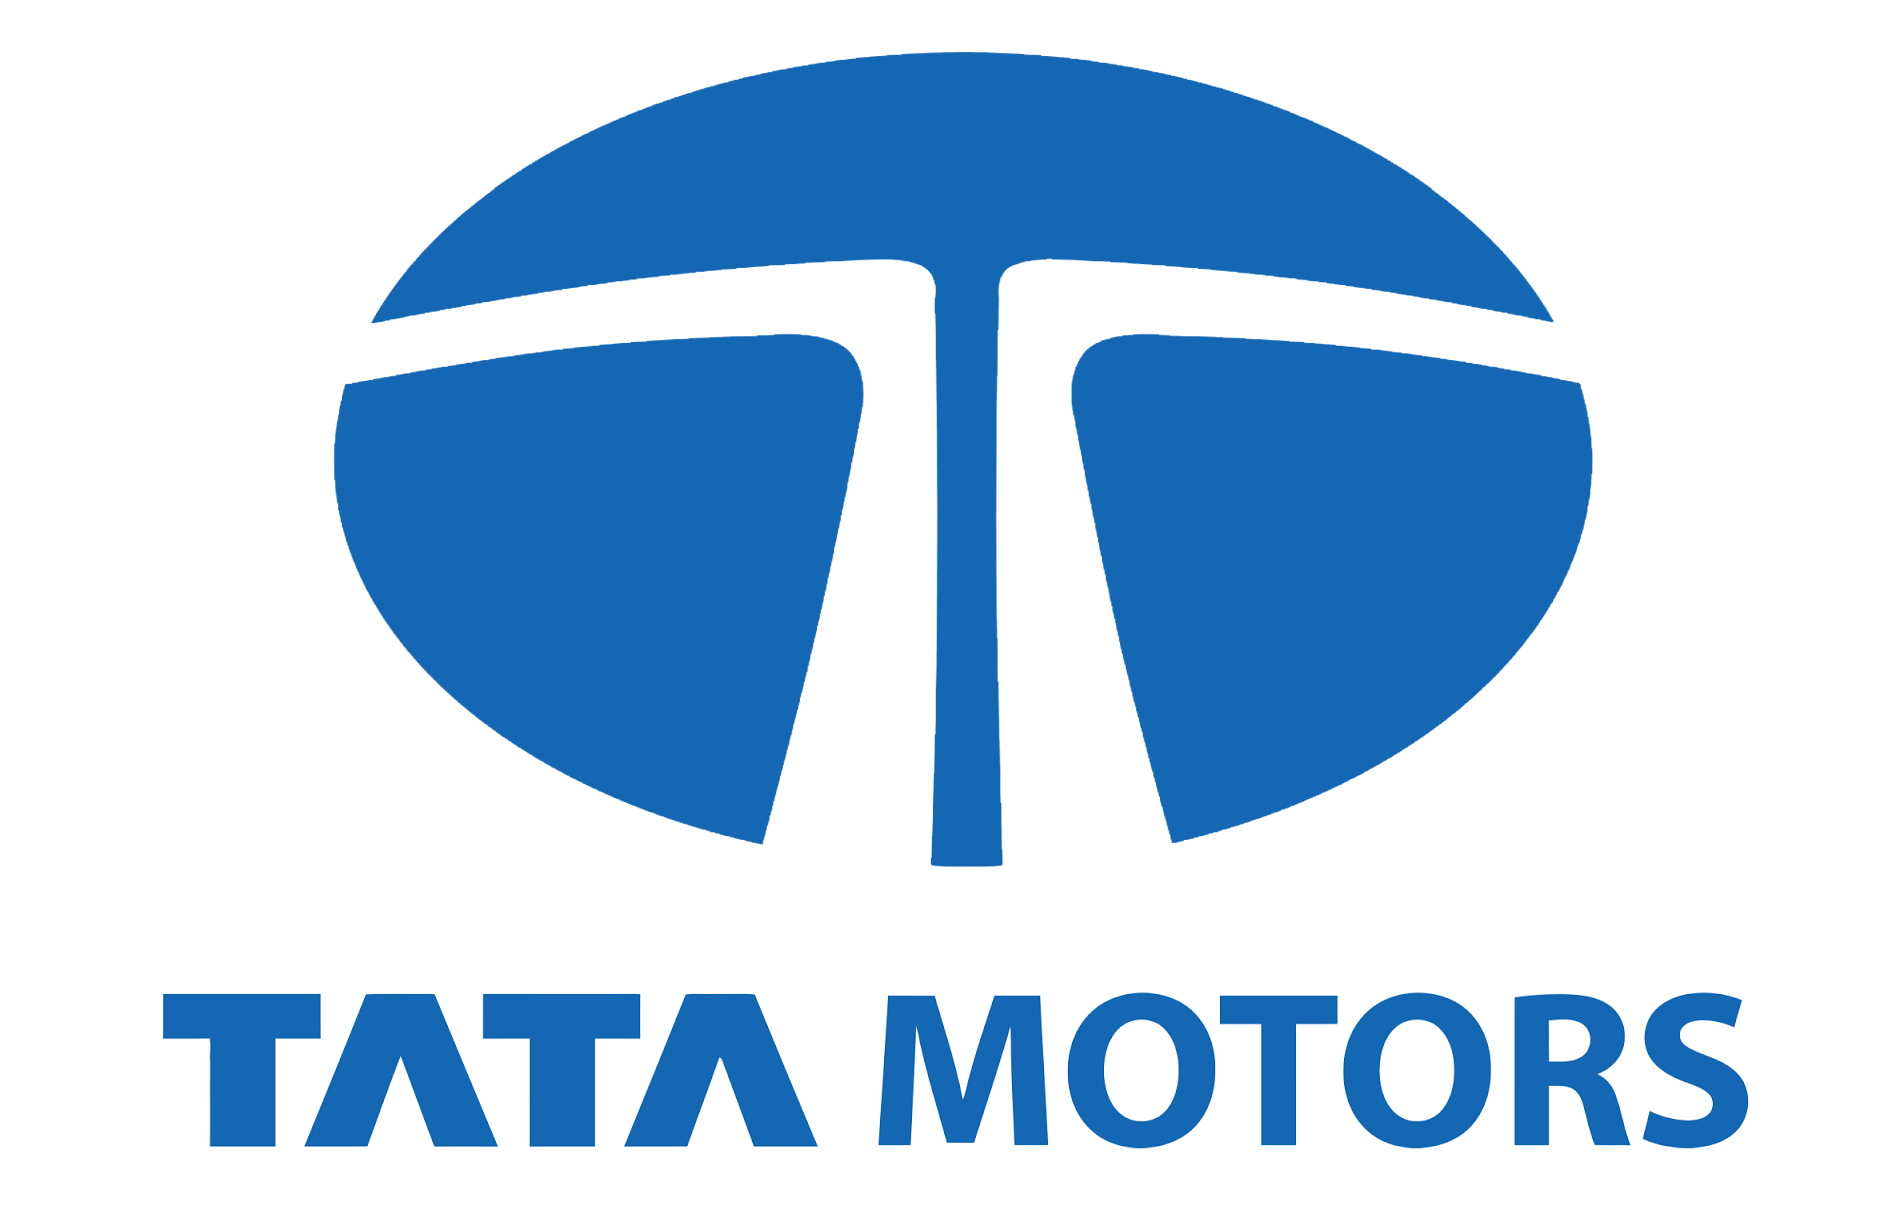 Tata Motors Cars Showroom - Suryoday Auto|Show Room|Automotive